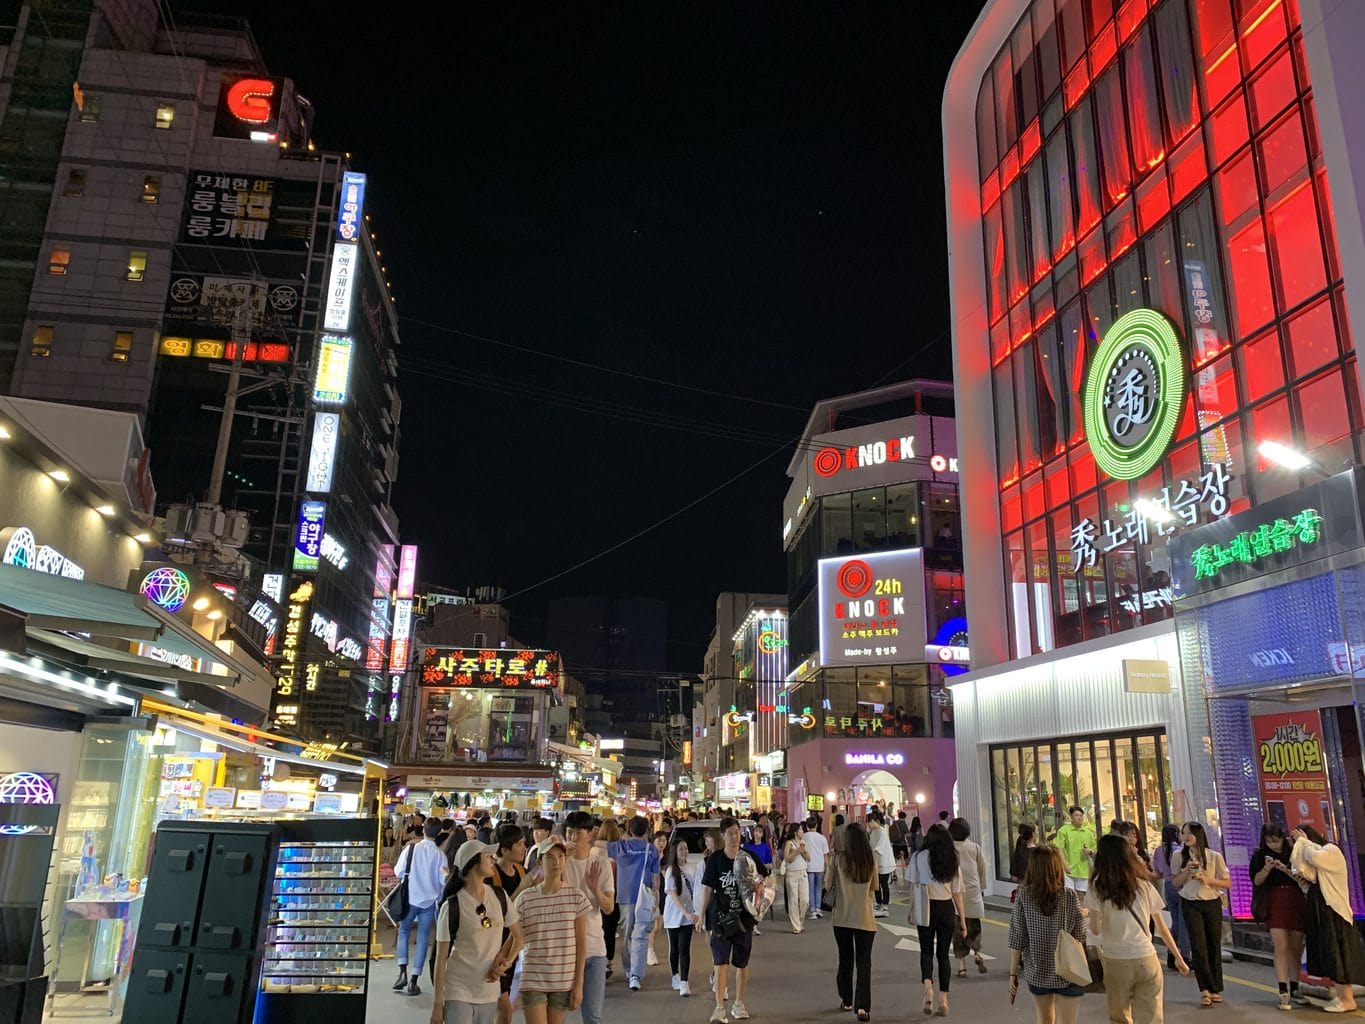 The nights streets of Hongdae